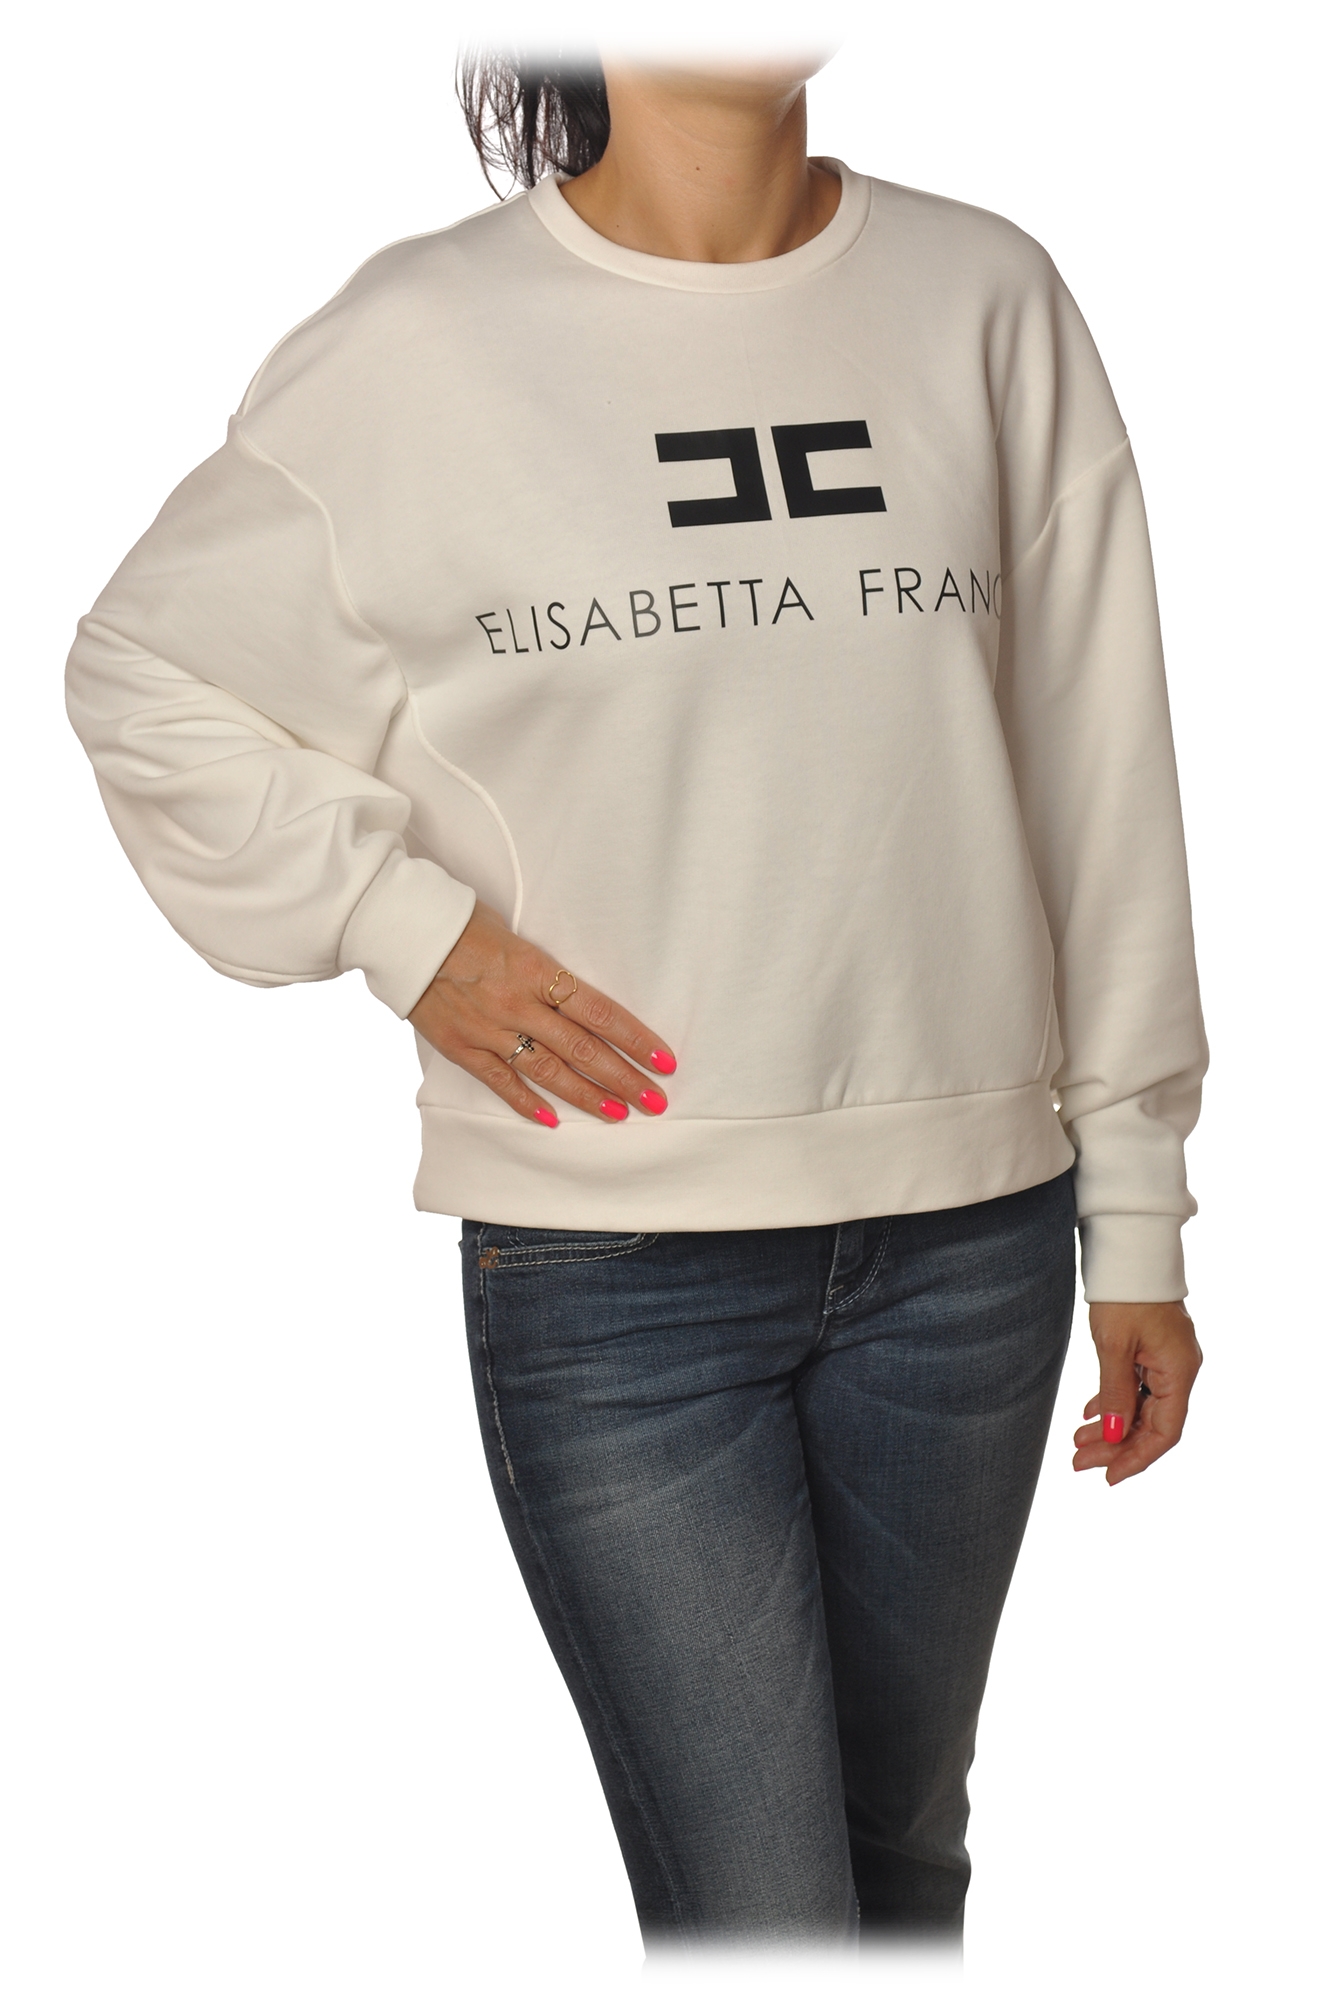 Elisabetta Franchi - Oversized Sweatshirt with Logo - Ivory - Sweatshirt -  Made in Italy - Luxury Exclusive Collection - Avvenice